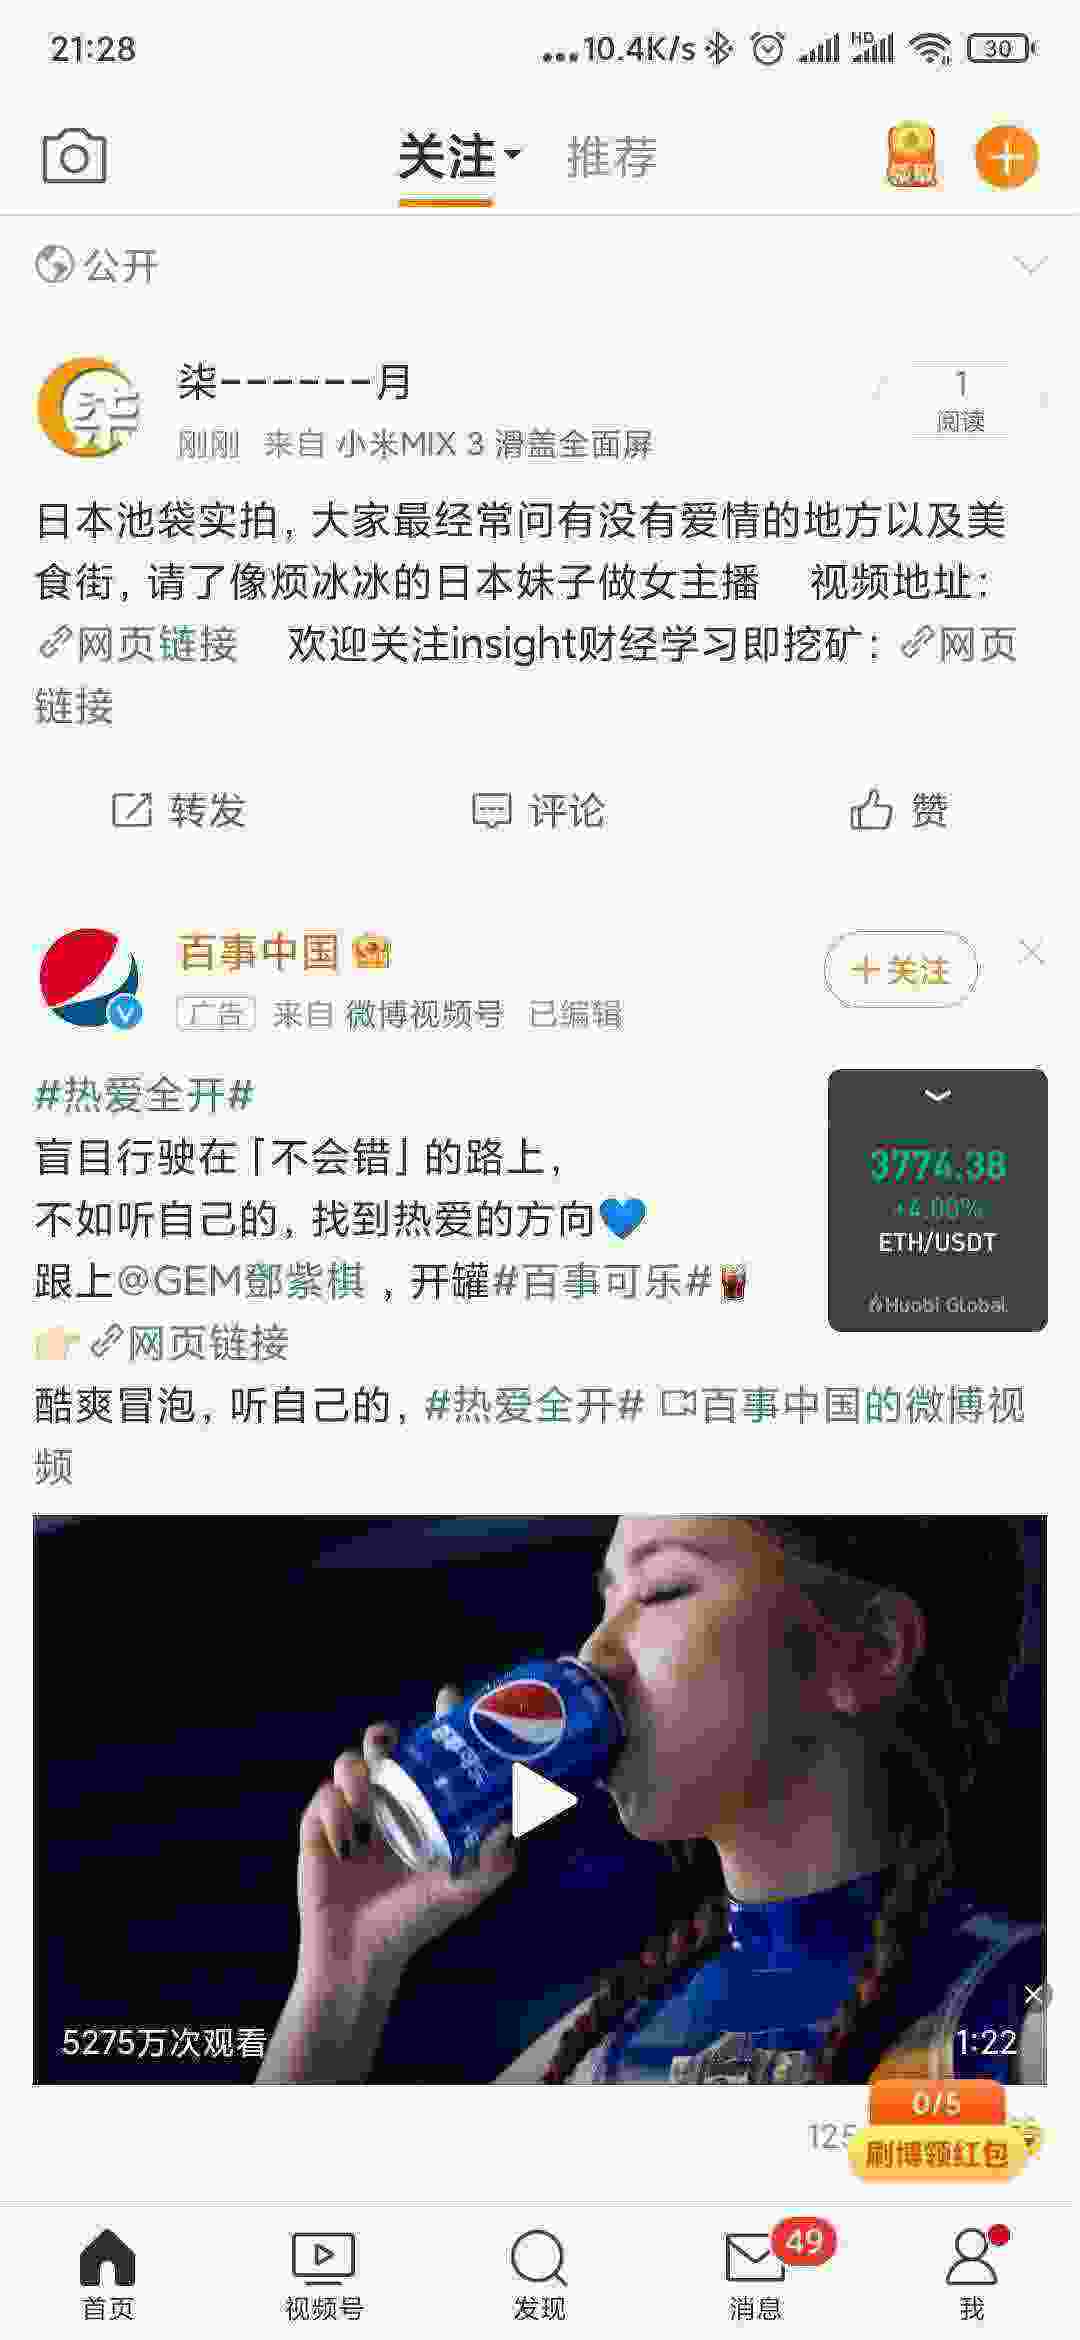 Screenshot_2021-05-09-21-28-40-058_com.sina.weibo.jpg